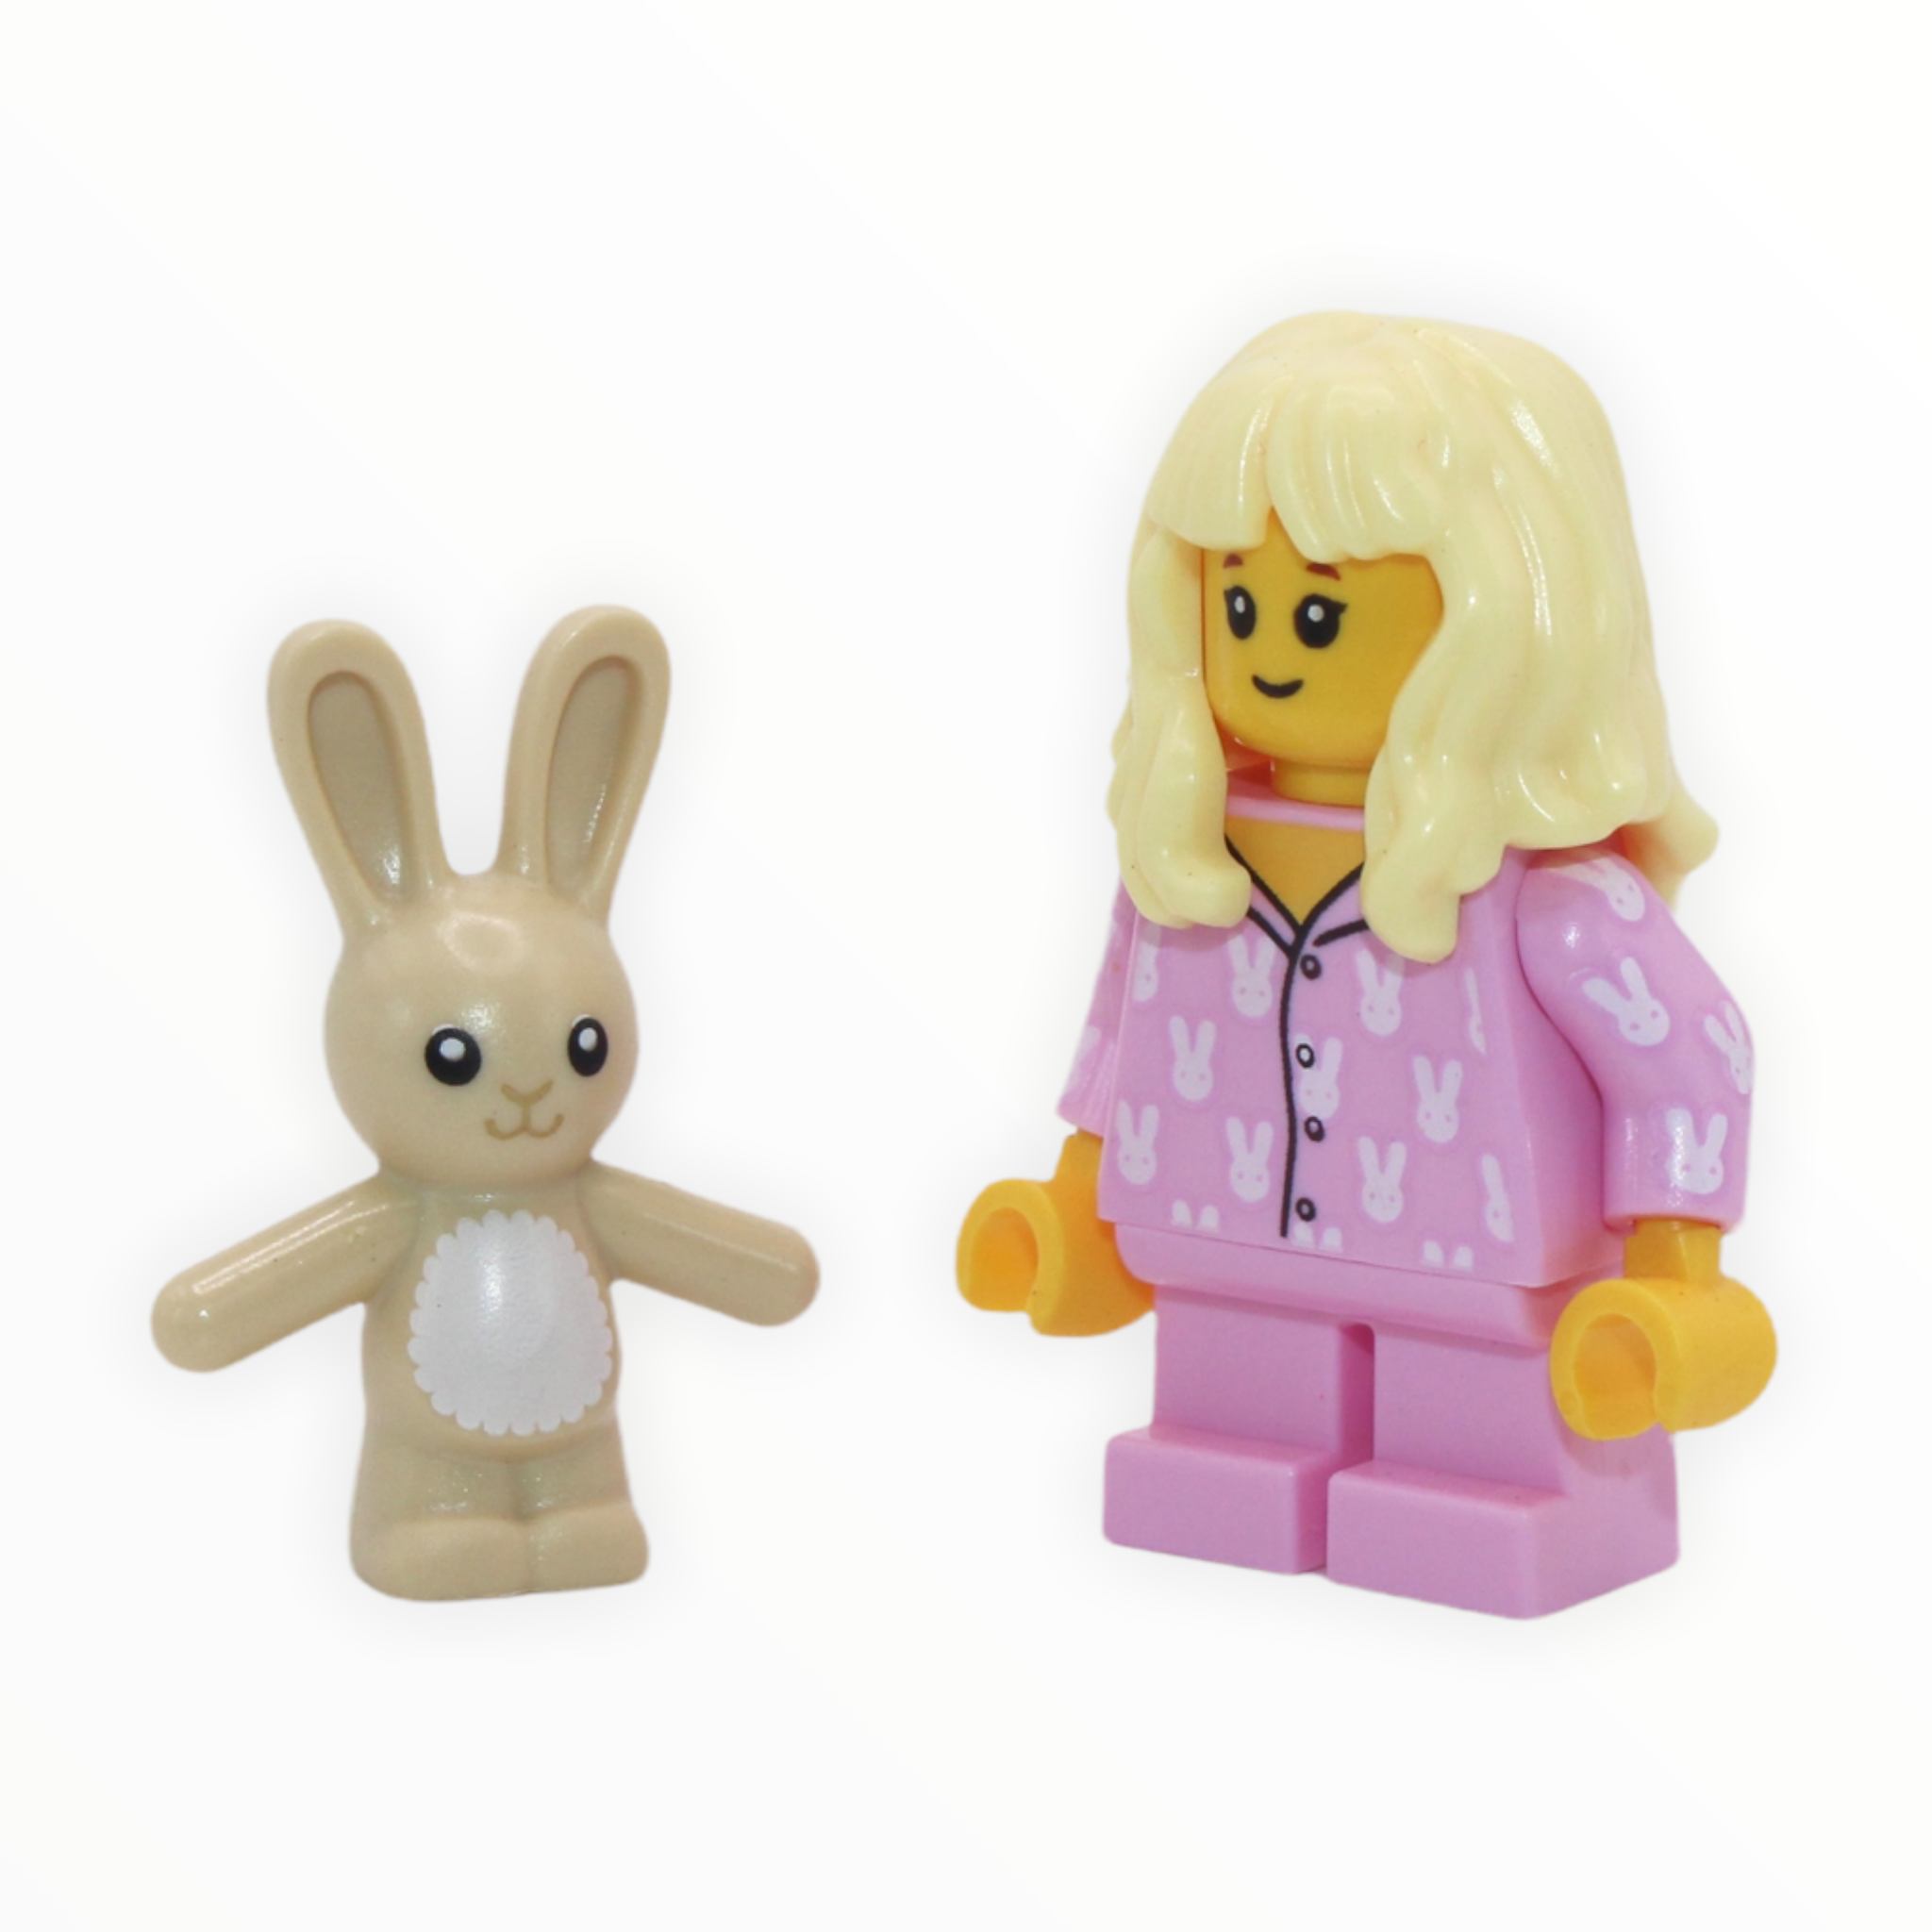 LEGO Series 20: Pajama Girl